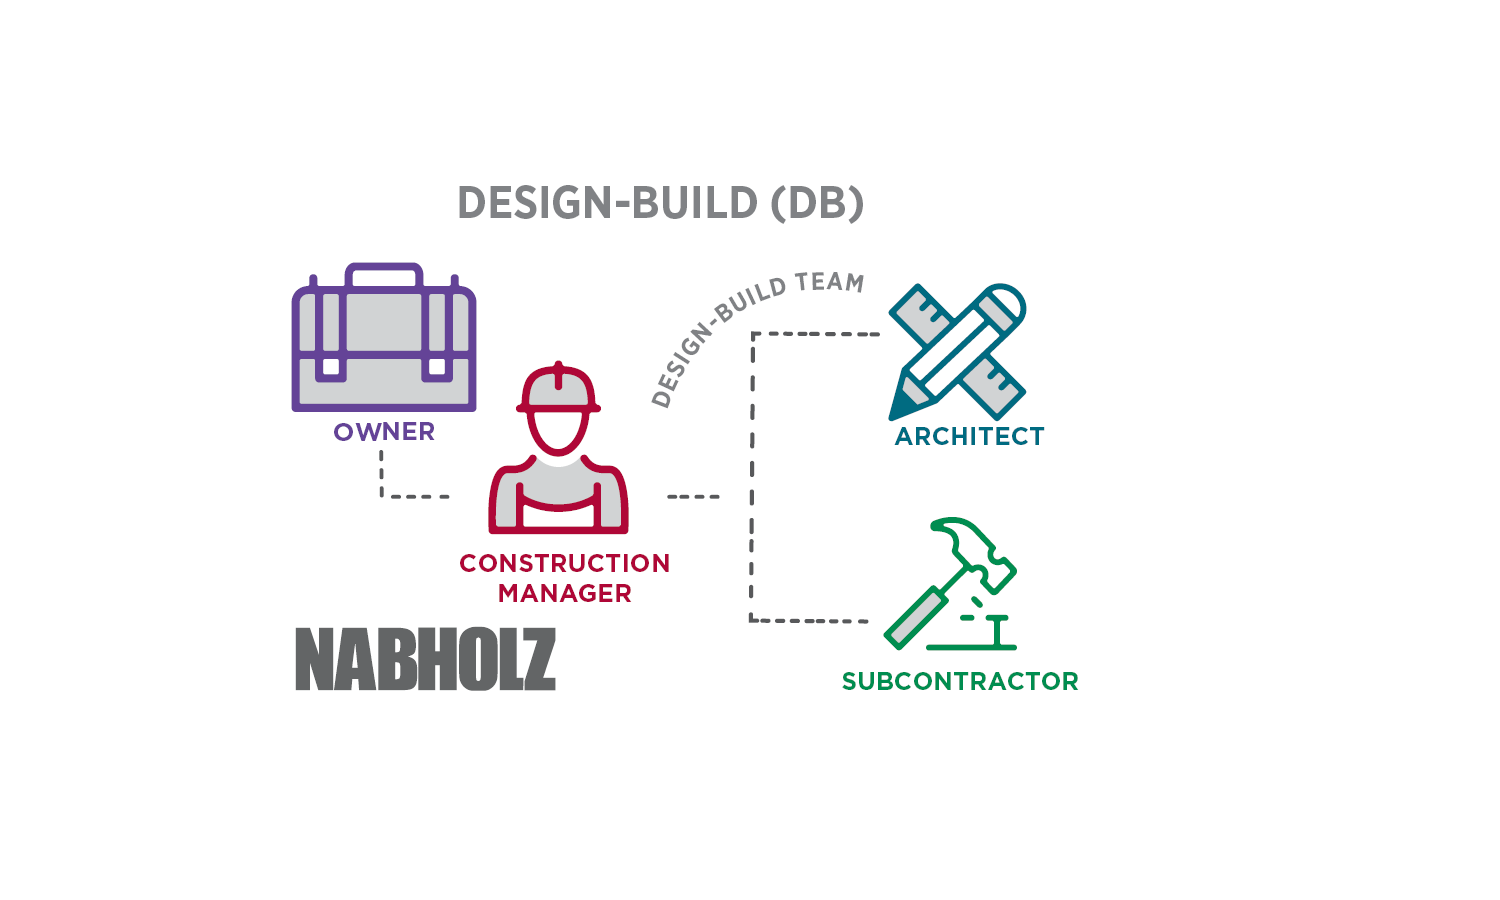 design-build, project delivery methods, nabholz